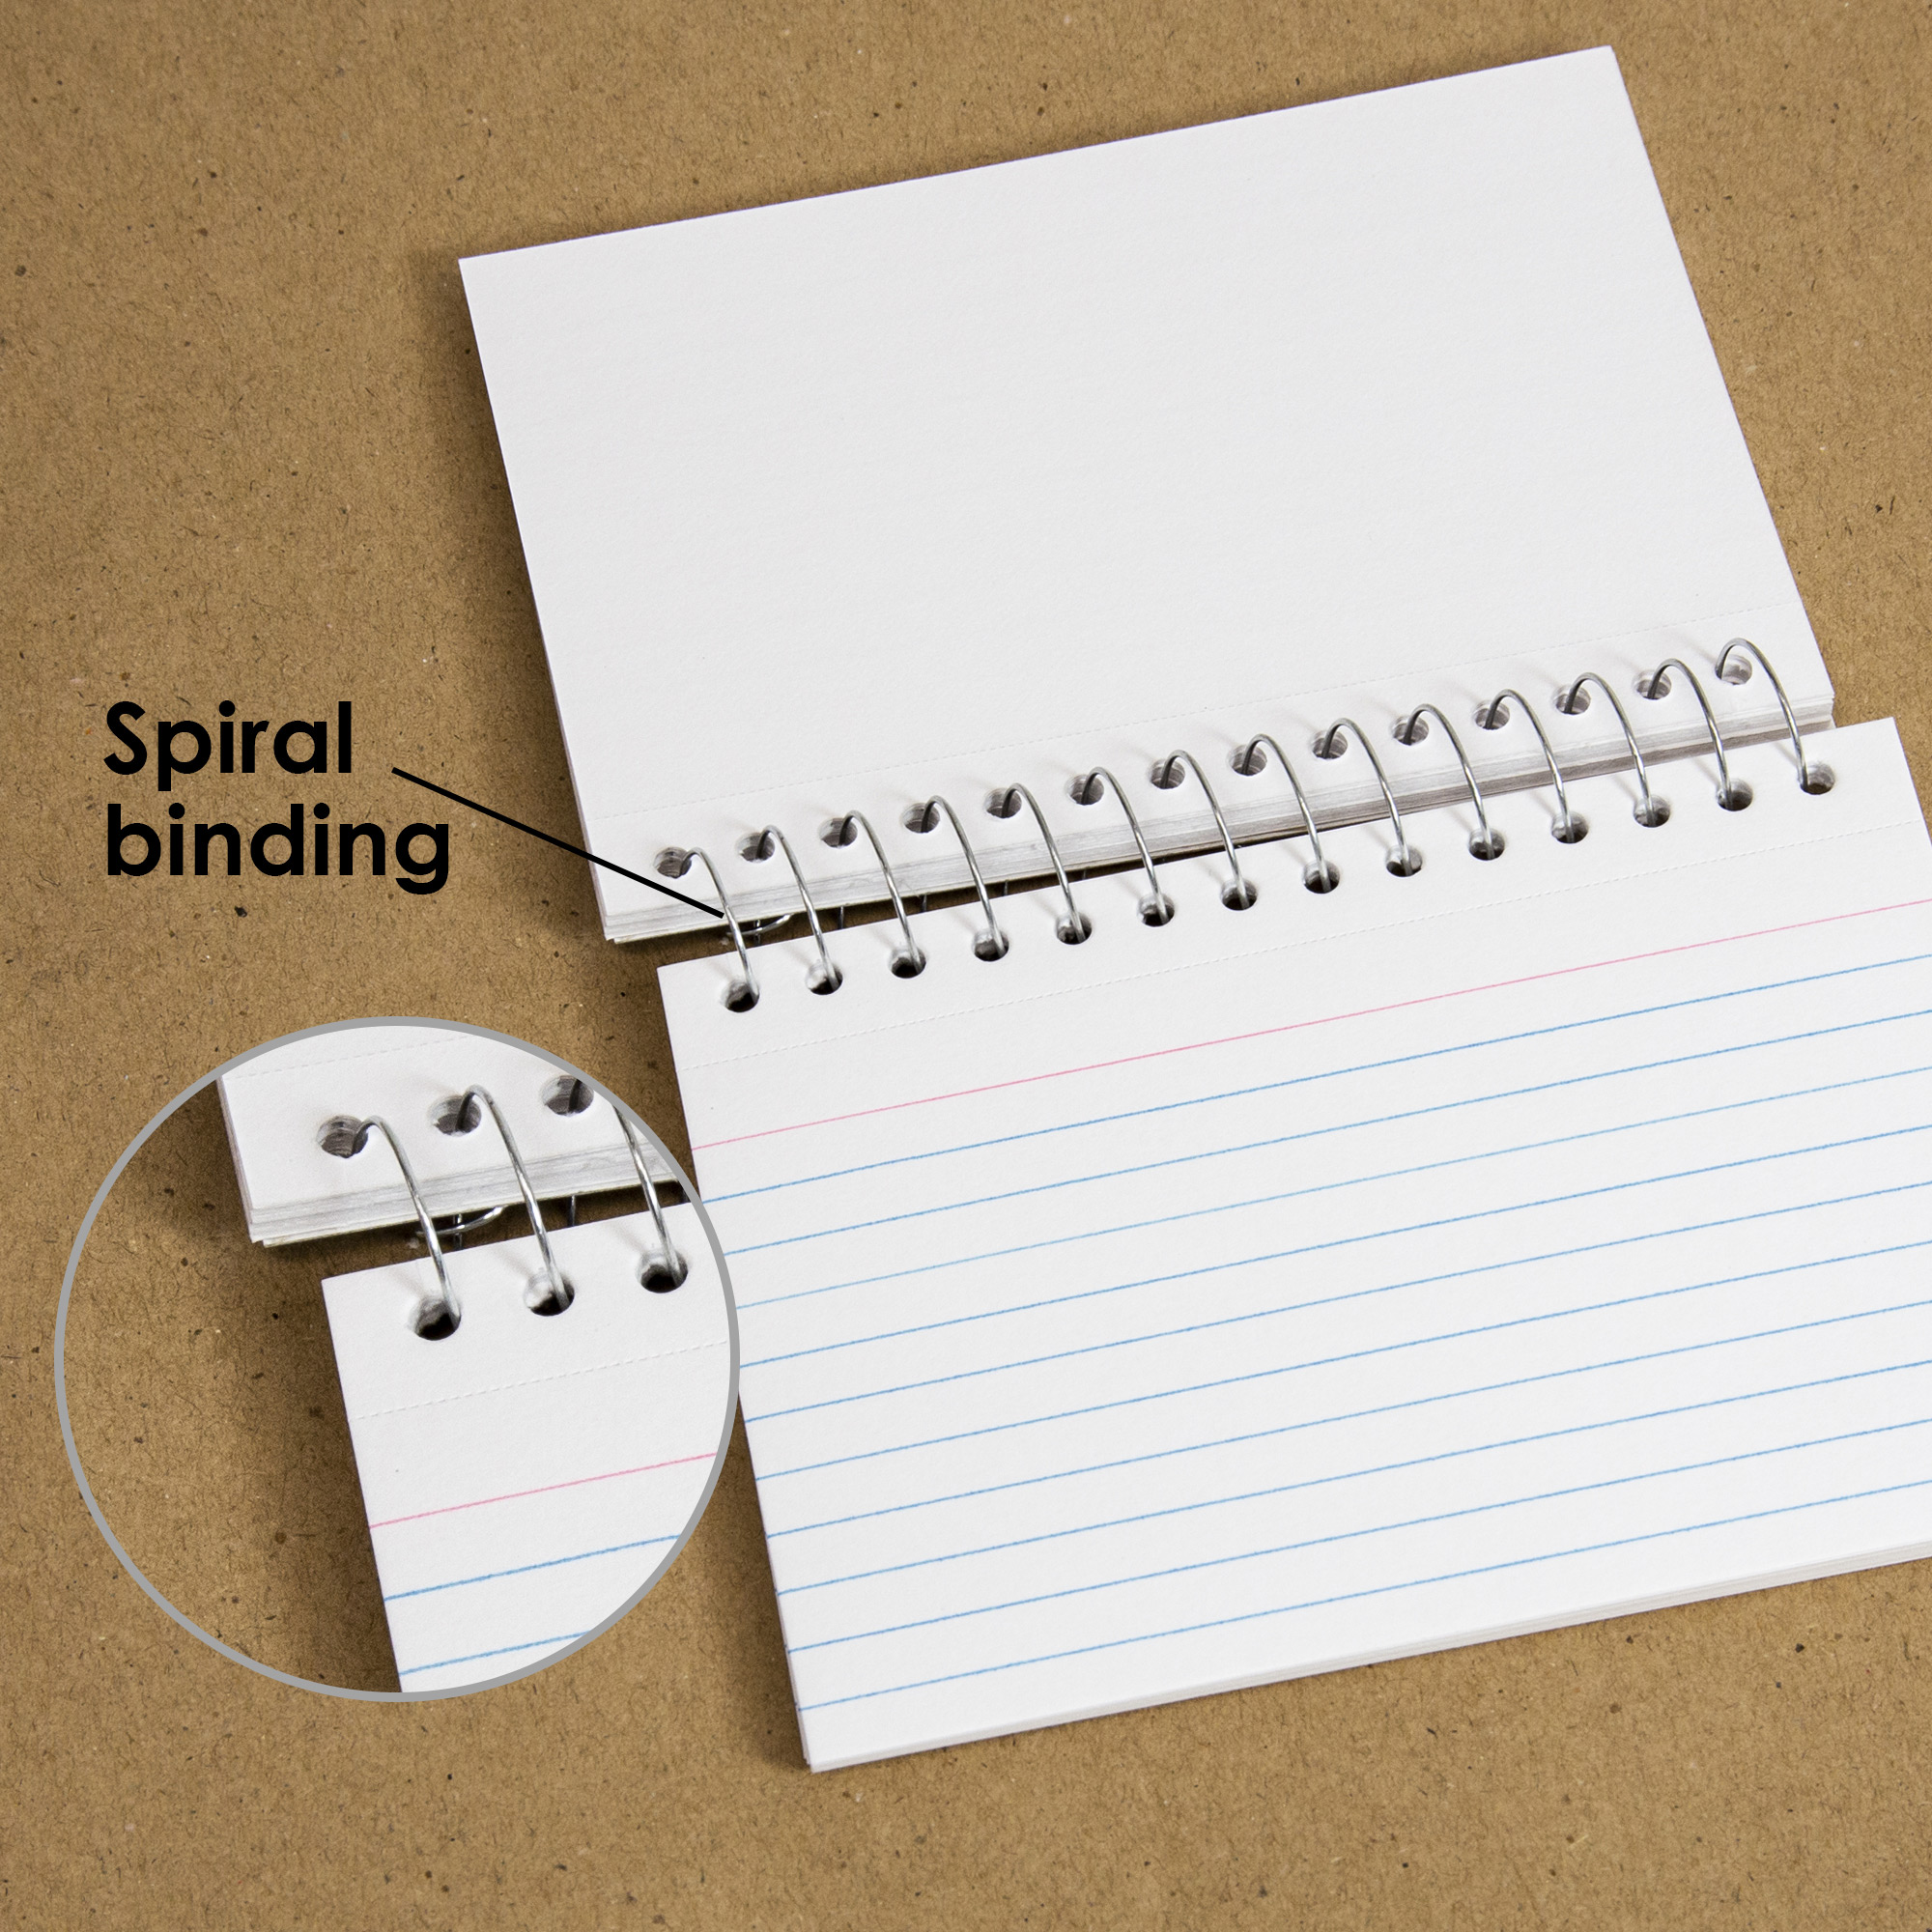 50 White Cards/Spiral Spiral Bound 1InTheOffice Spiral Index Cards 3 x 5 Ruled 